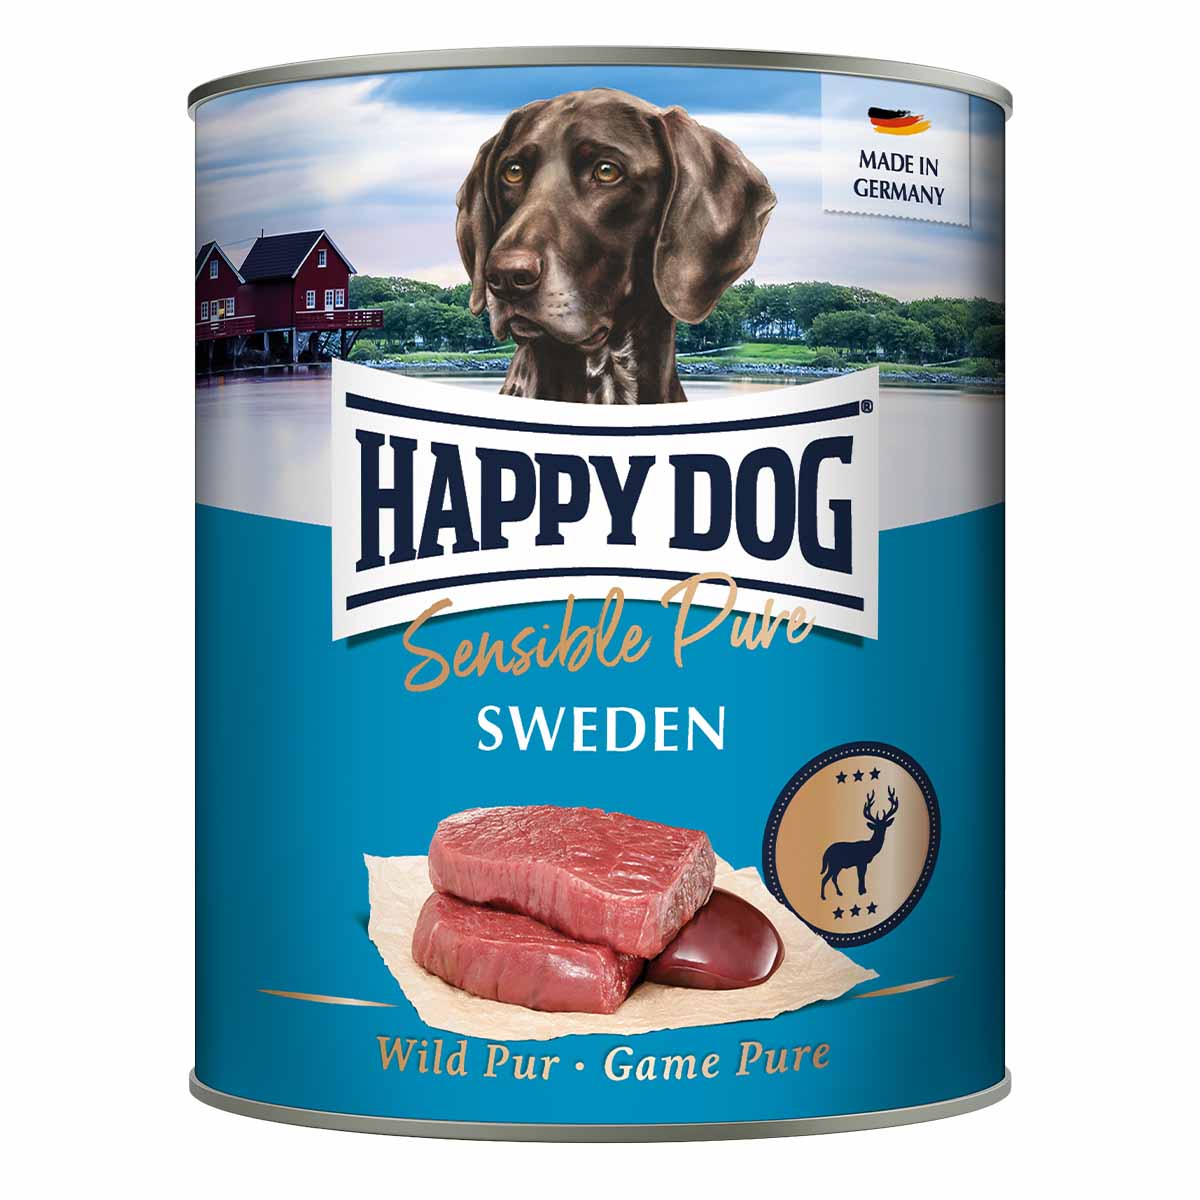 Happy Dog Sensible Pure Sweden (Wild) 6x800g